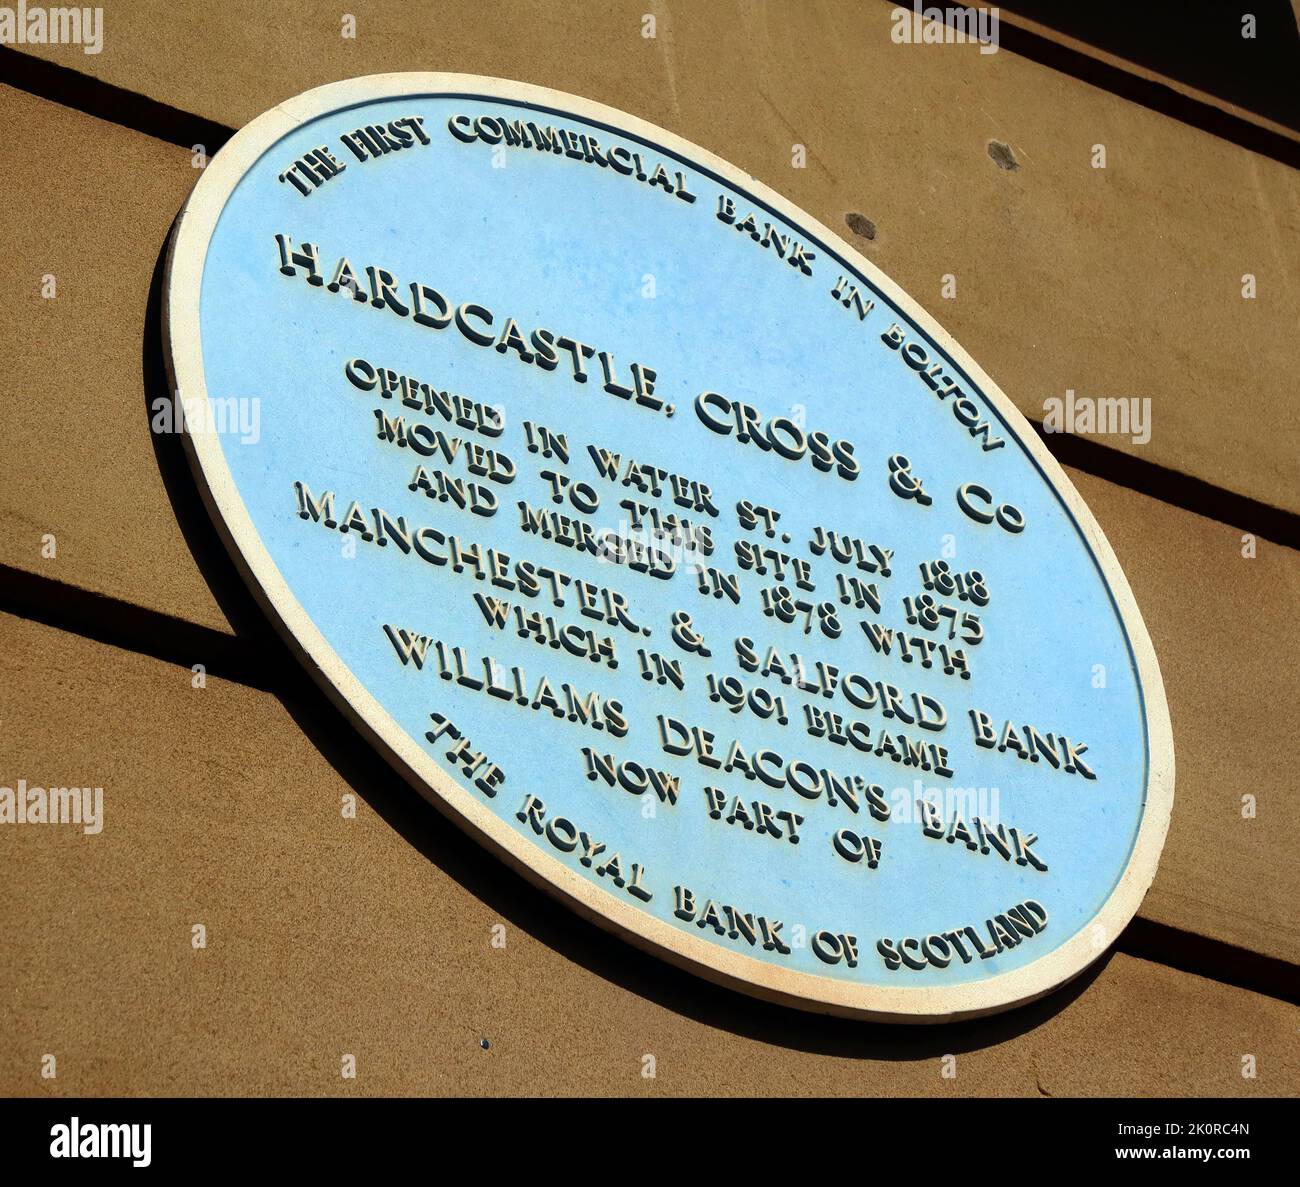 Blue Plaque, Hardcastle Cross & Co, erste Geschäftsbank in Bolton, Water Street, Greater Manchester, England, Großbritannien, BL1 1TR Stockfoto